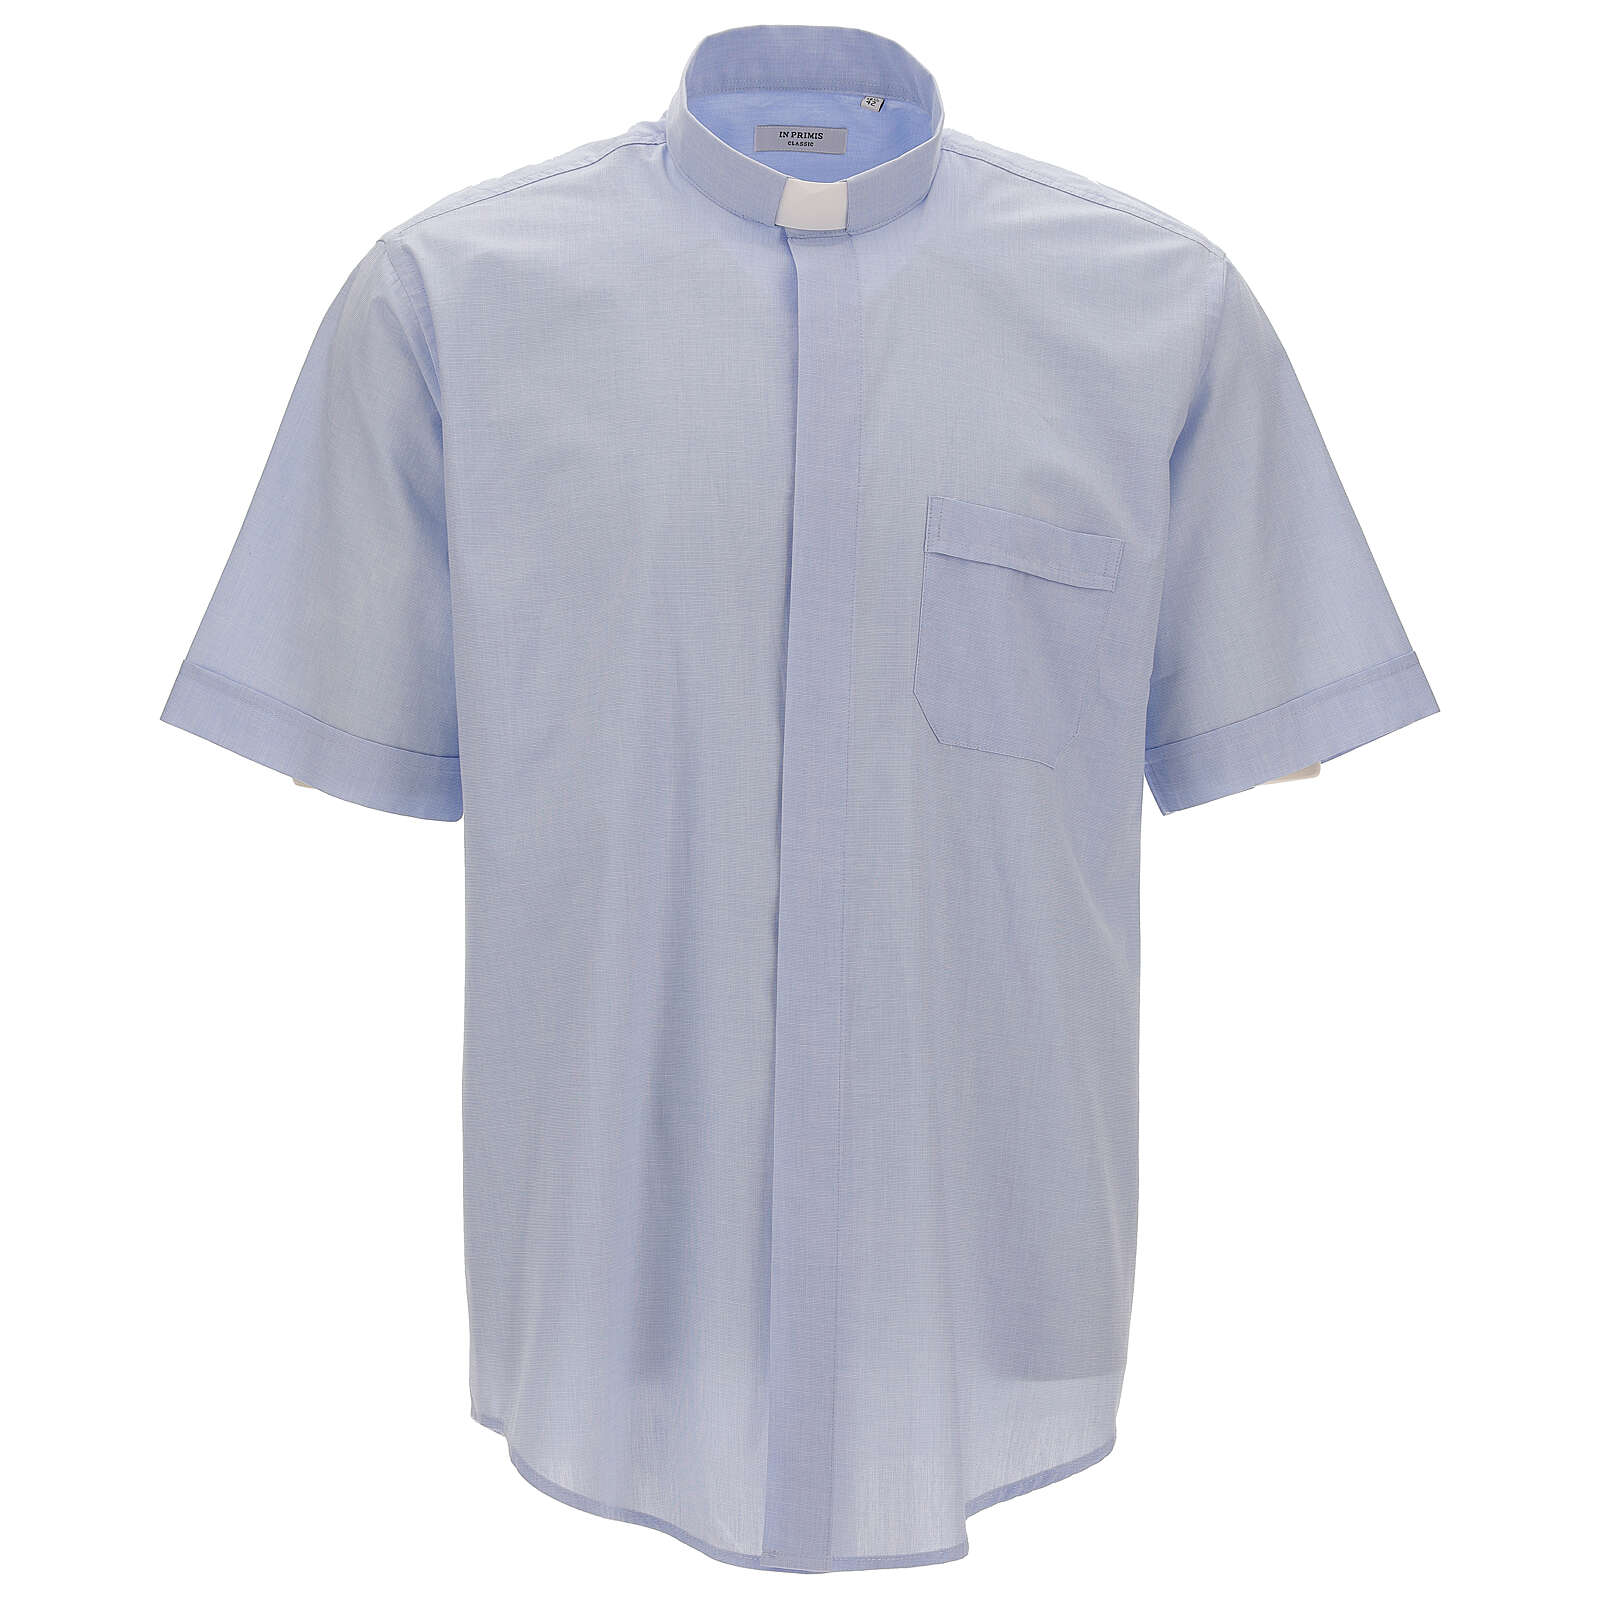 Clergical shirt, light blue fil à fil cotton, short sleeves | online ...